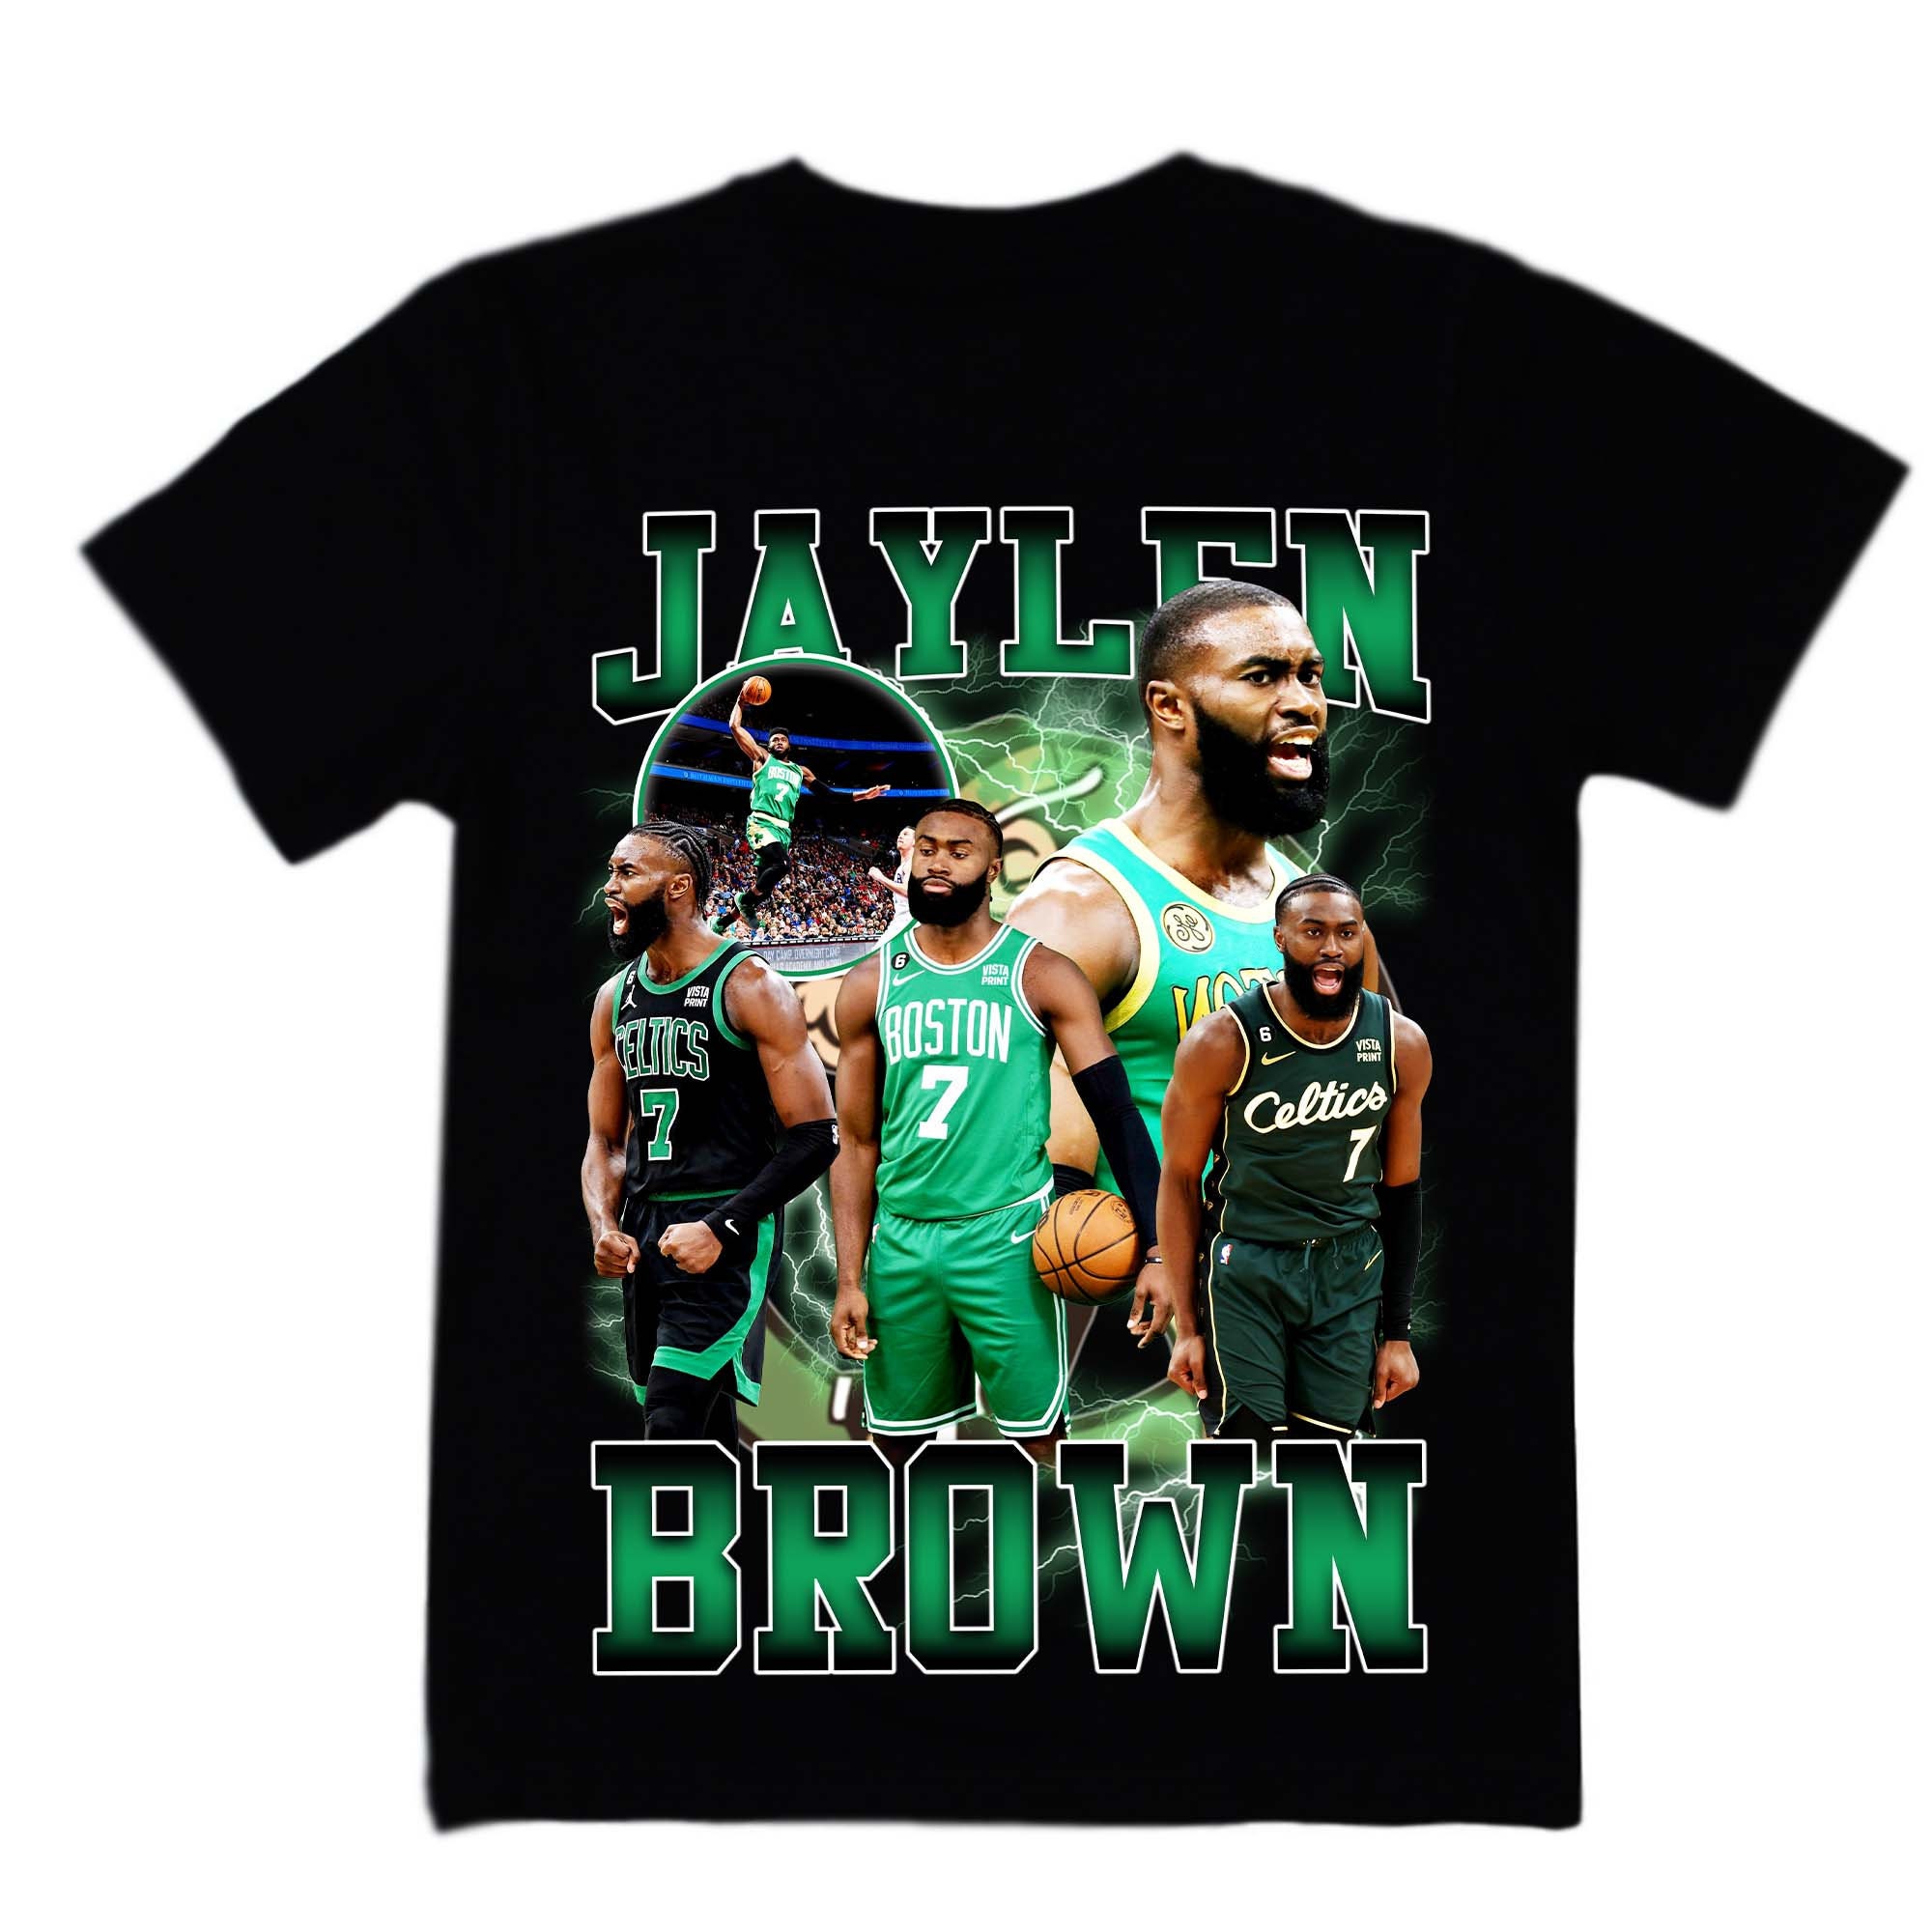 Jaylen Brown Shirt, Jaylen Brown T Shirt, Jaylen Brown Ethni - Inspire  Uplift